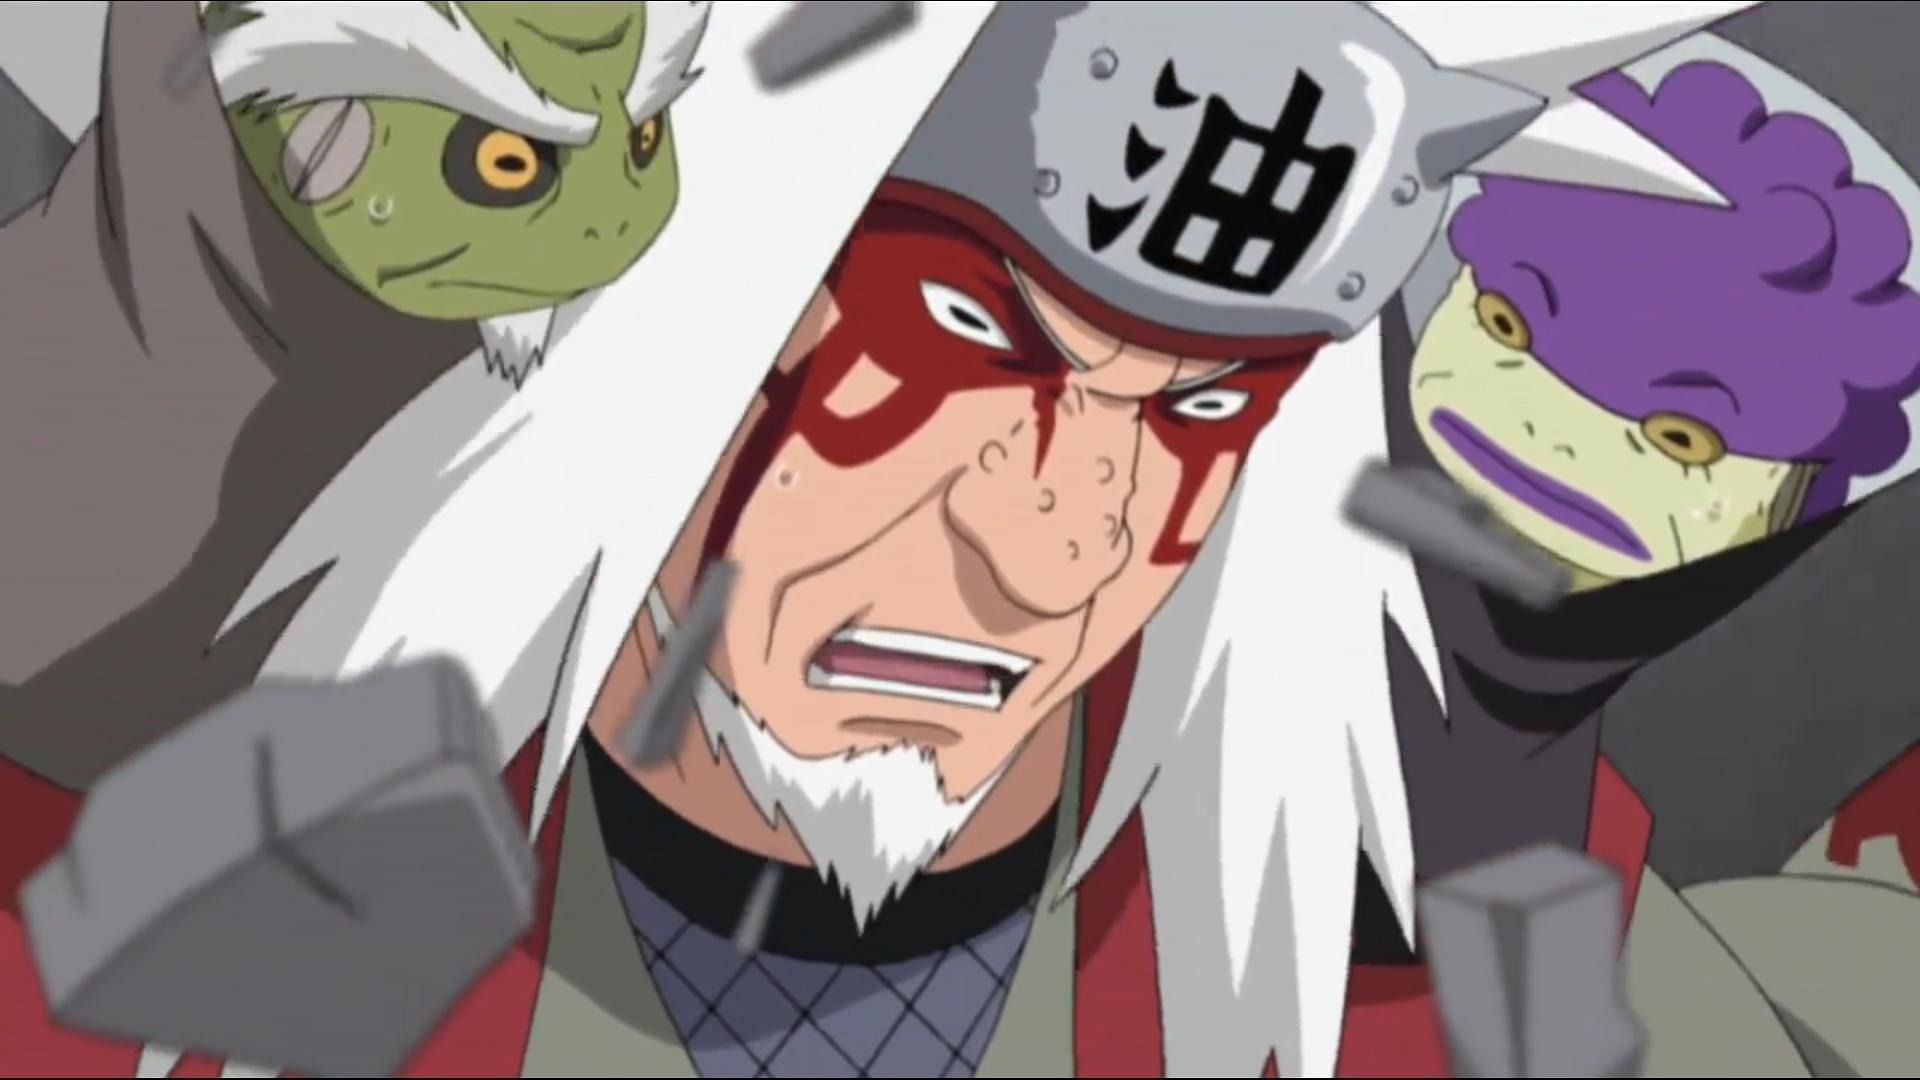 Jiraiya as seen in Naruto Shippuden anime (Image via Studio Pierrot)